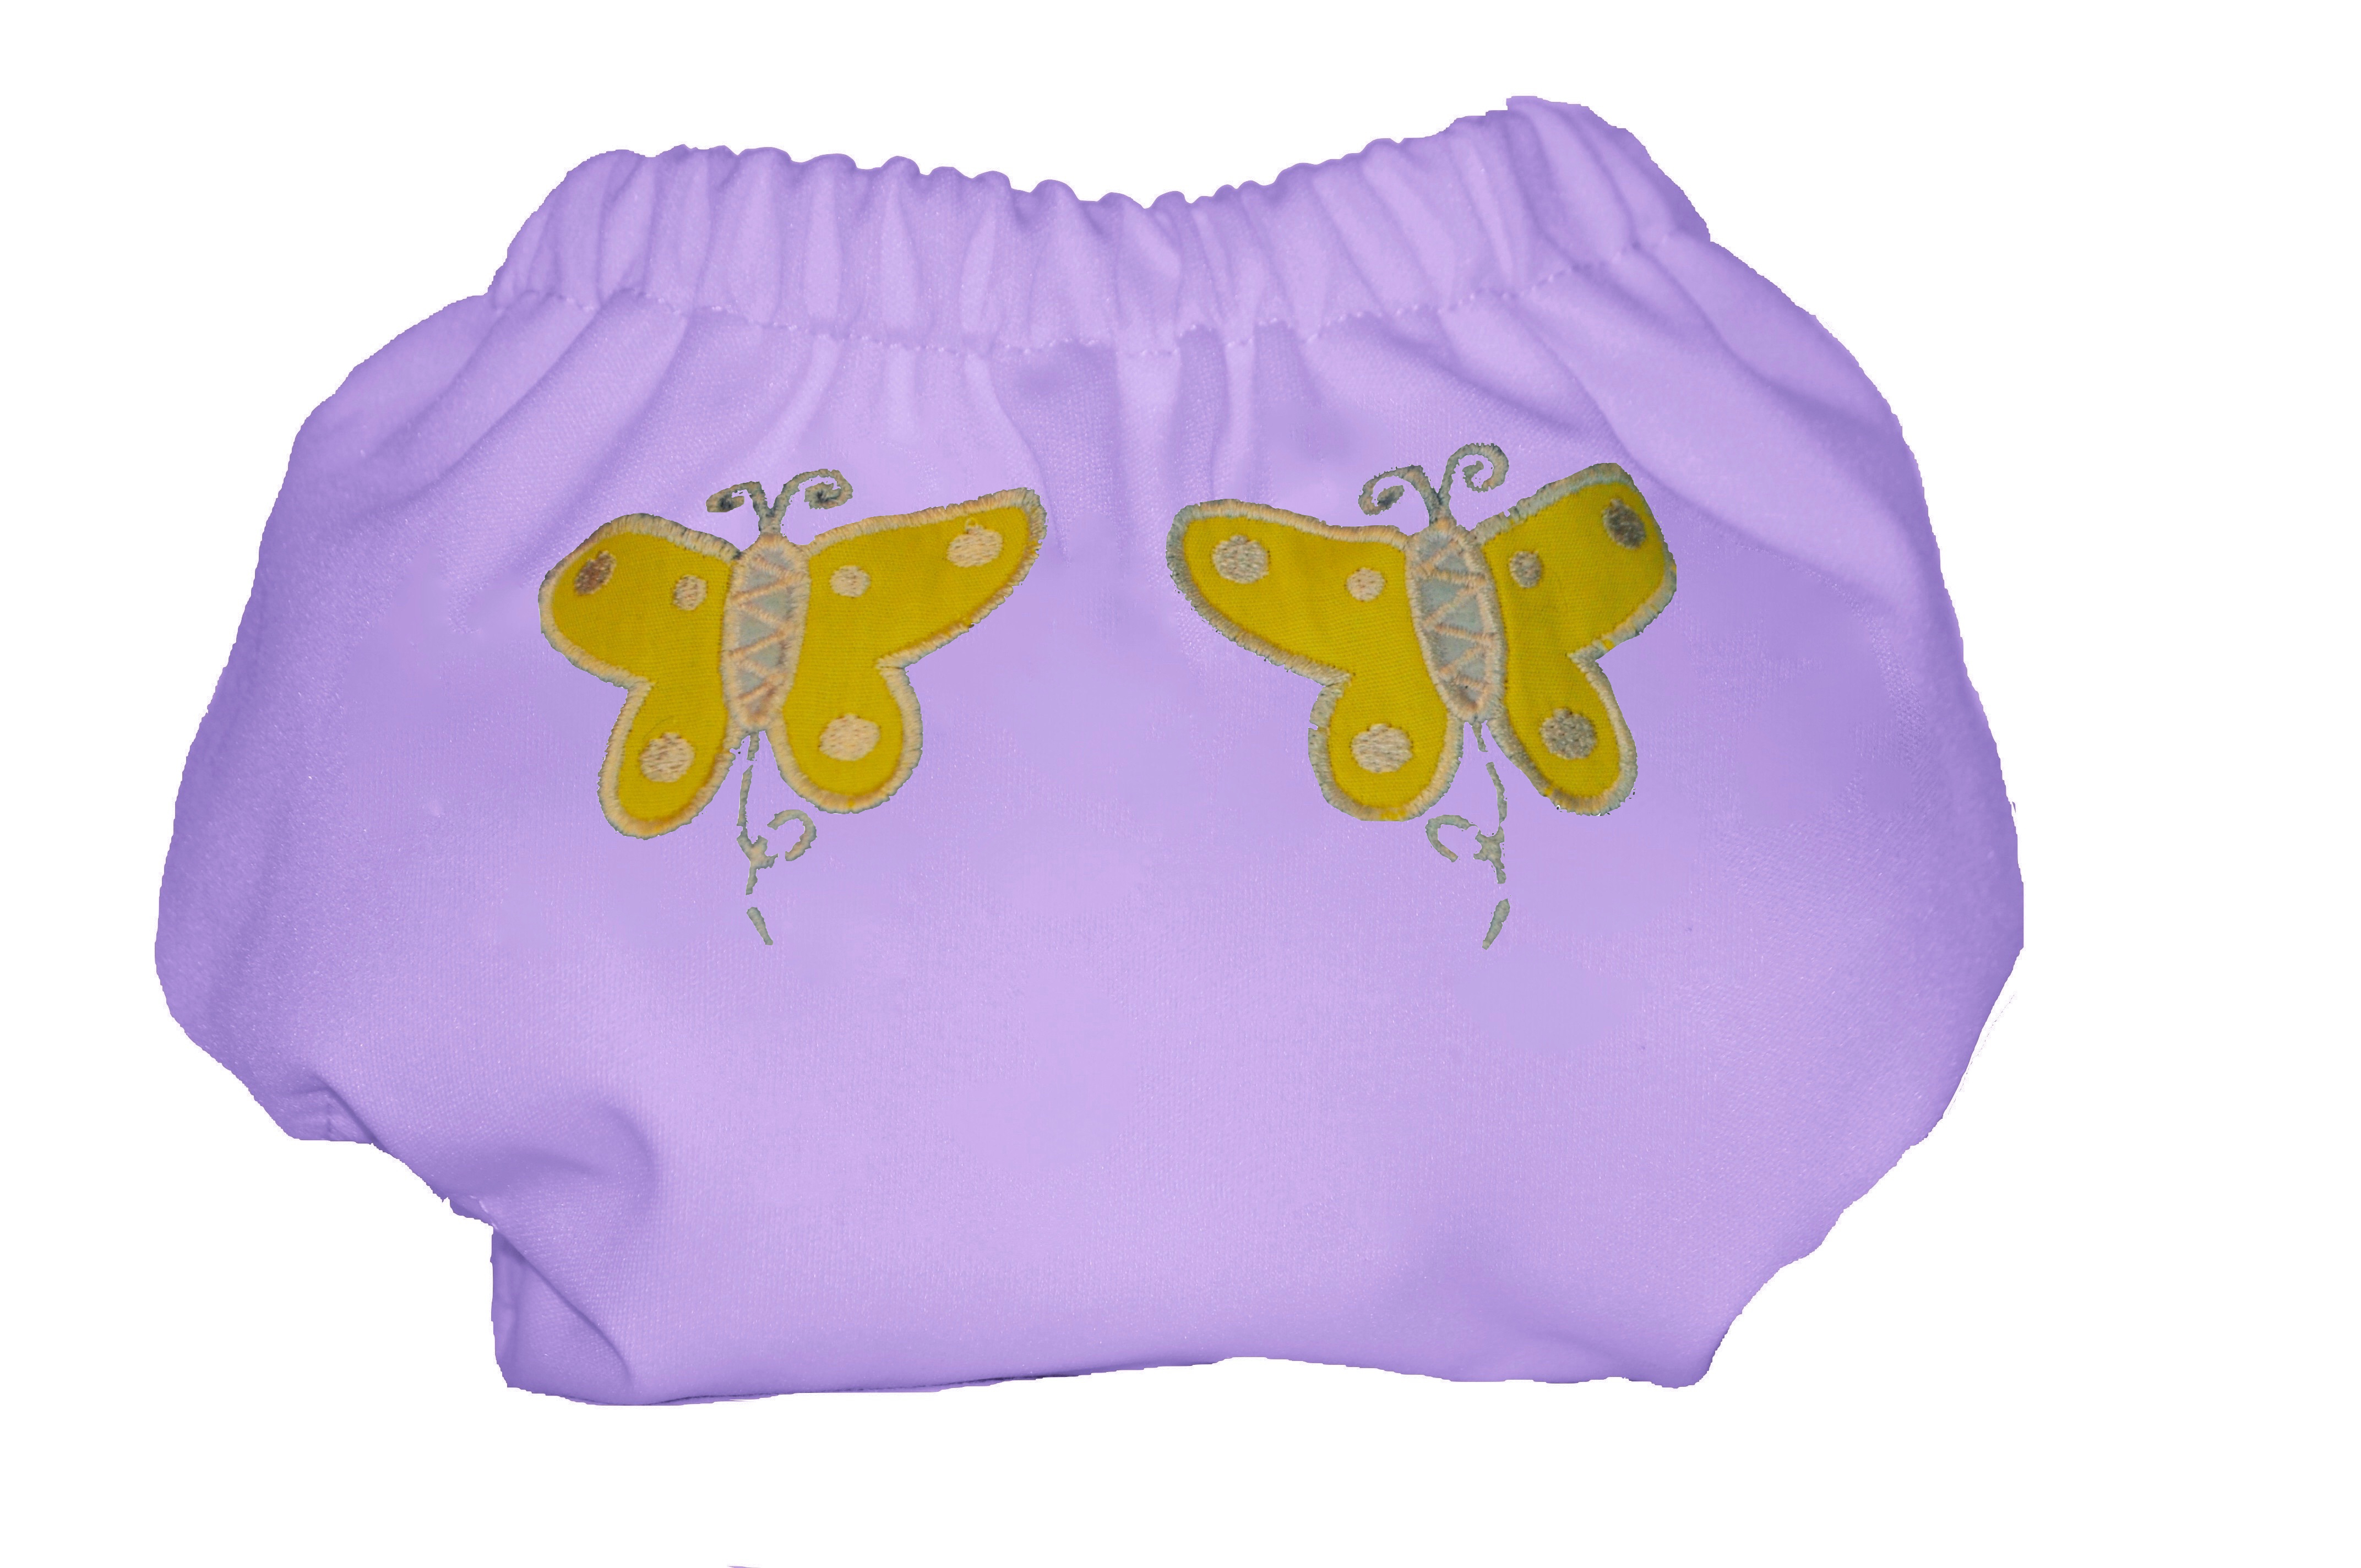 FleeceLuxe One Size Pocket Diaper Snap Closure (2 Pack) "Lavender Butterflies"